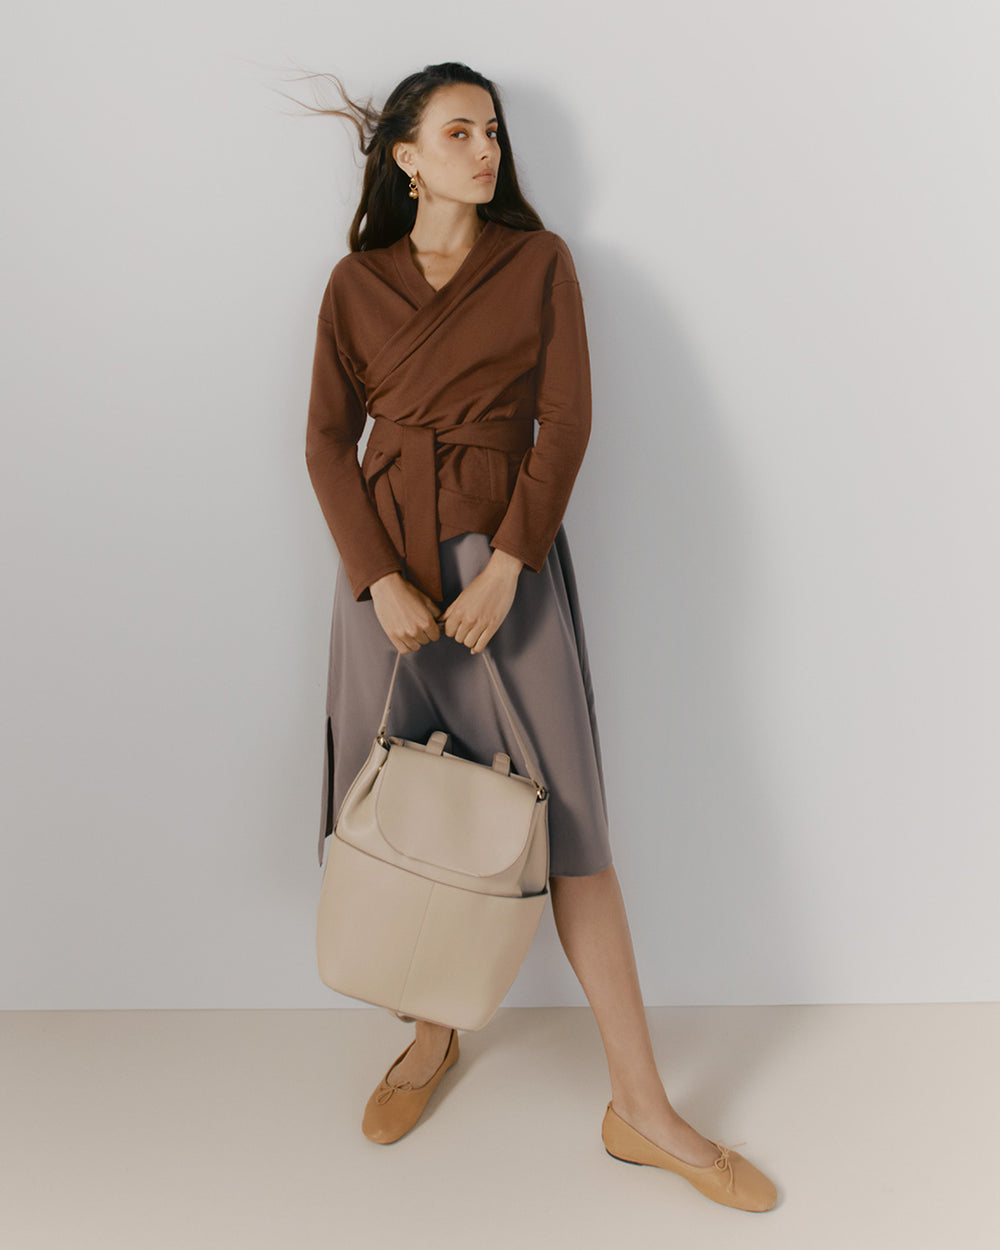 Woman standing holding a handbag, looking sideways.